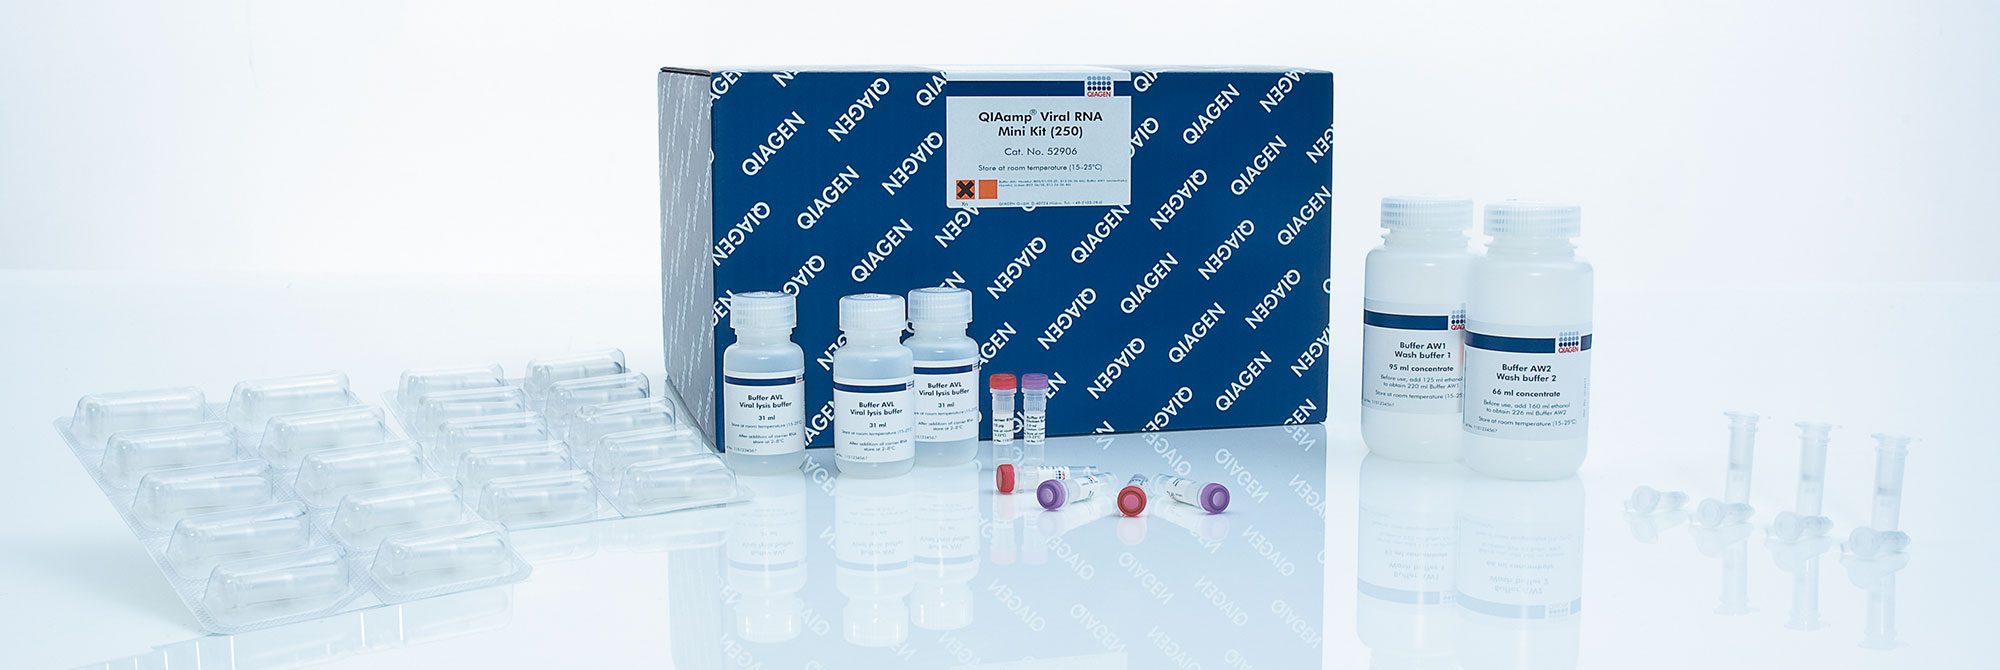 Image of QIAamp Viral RNA Mini Kit